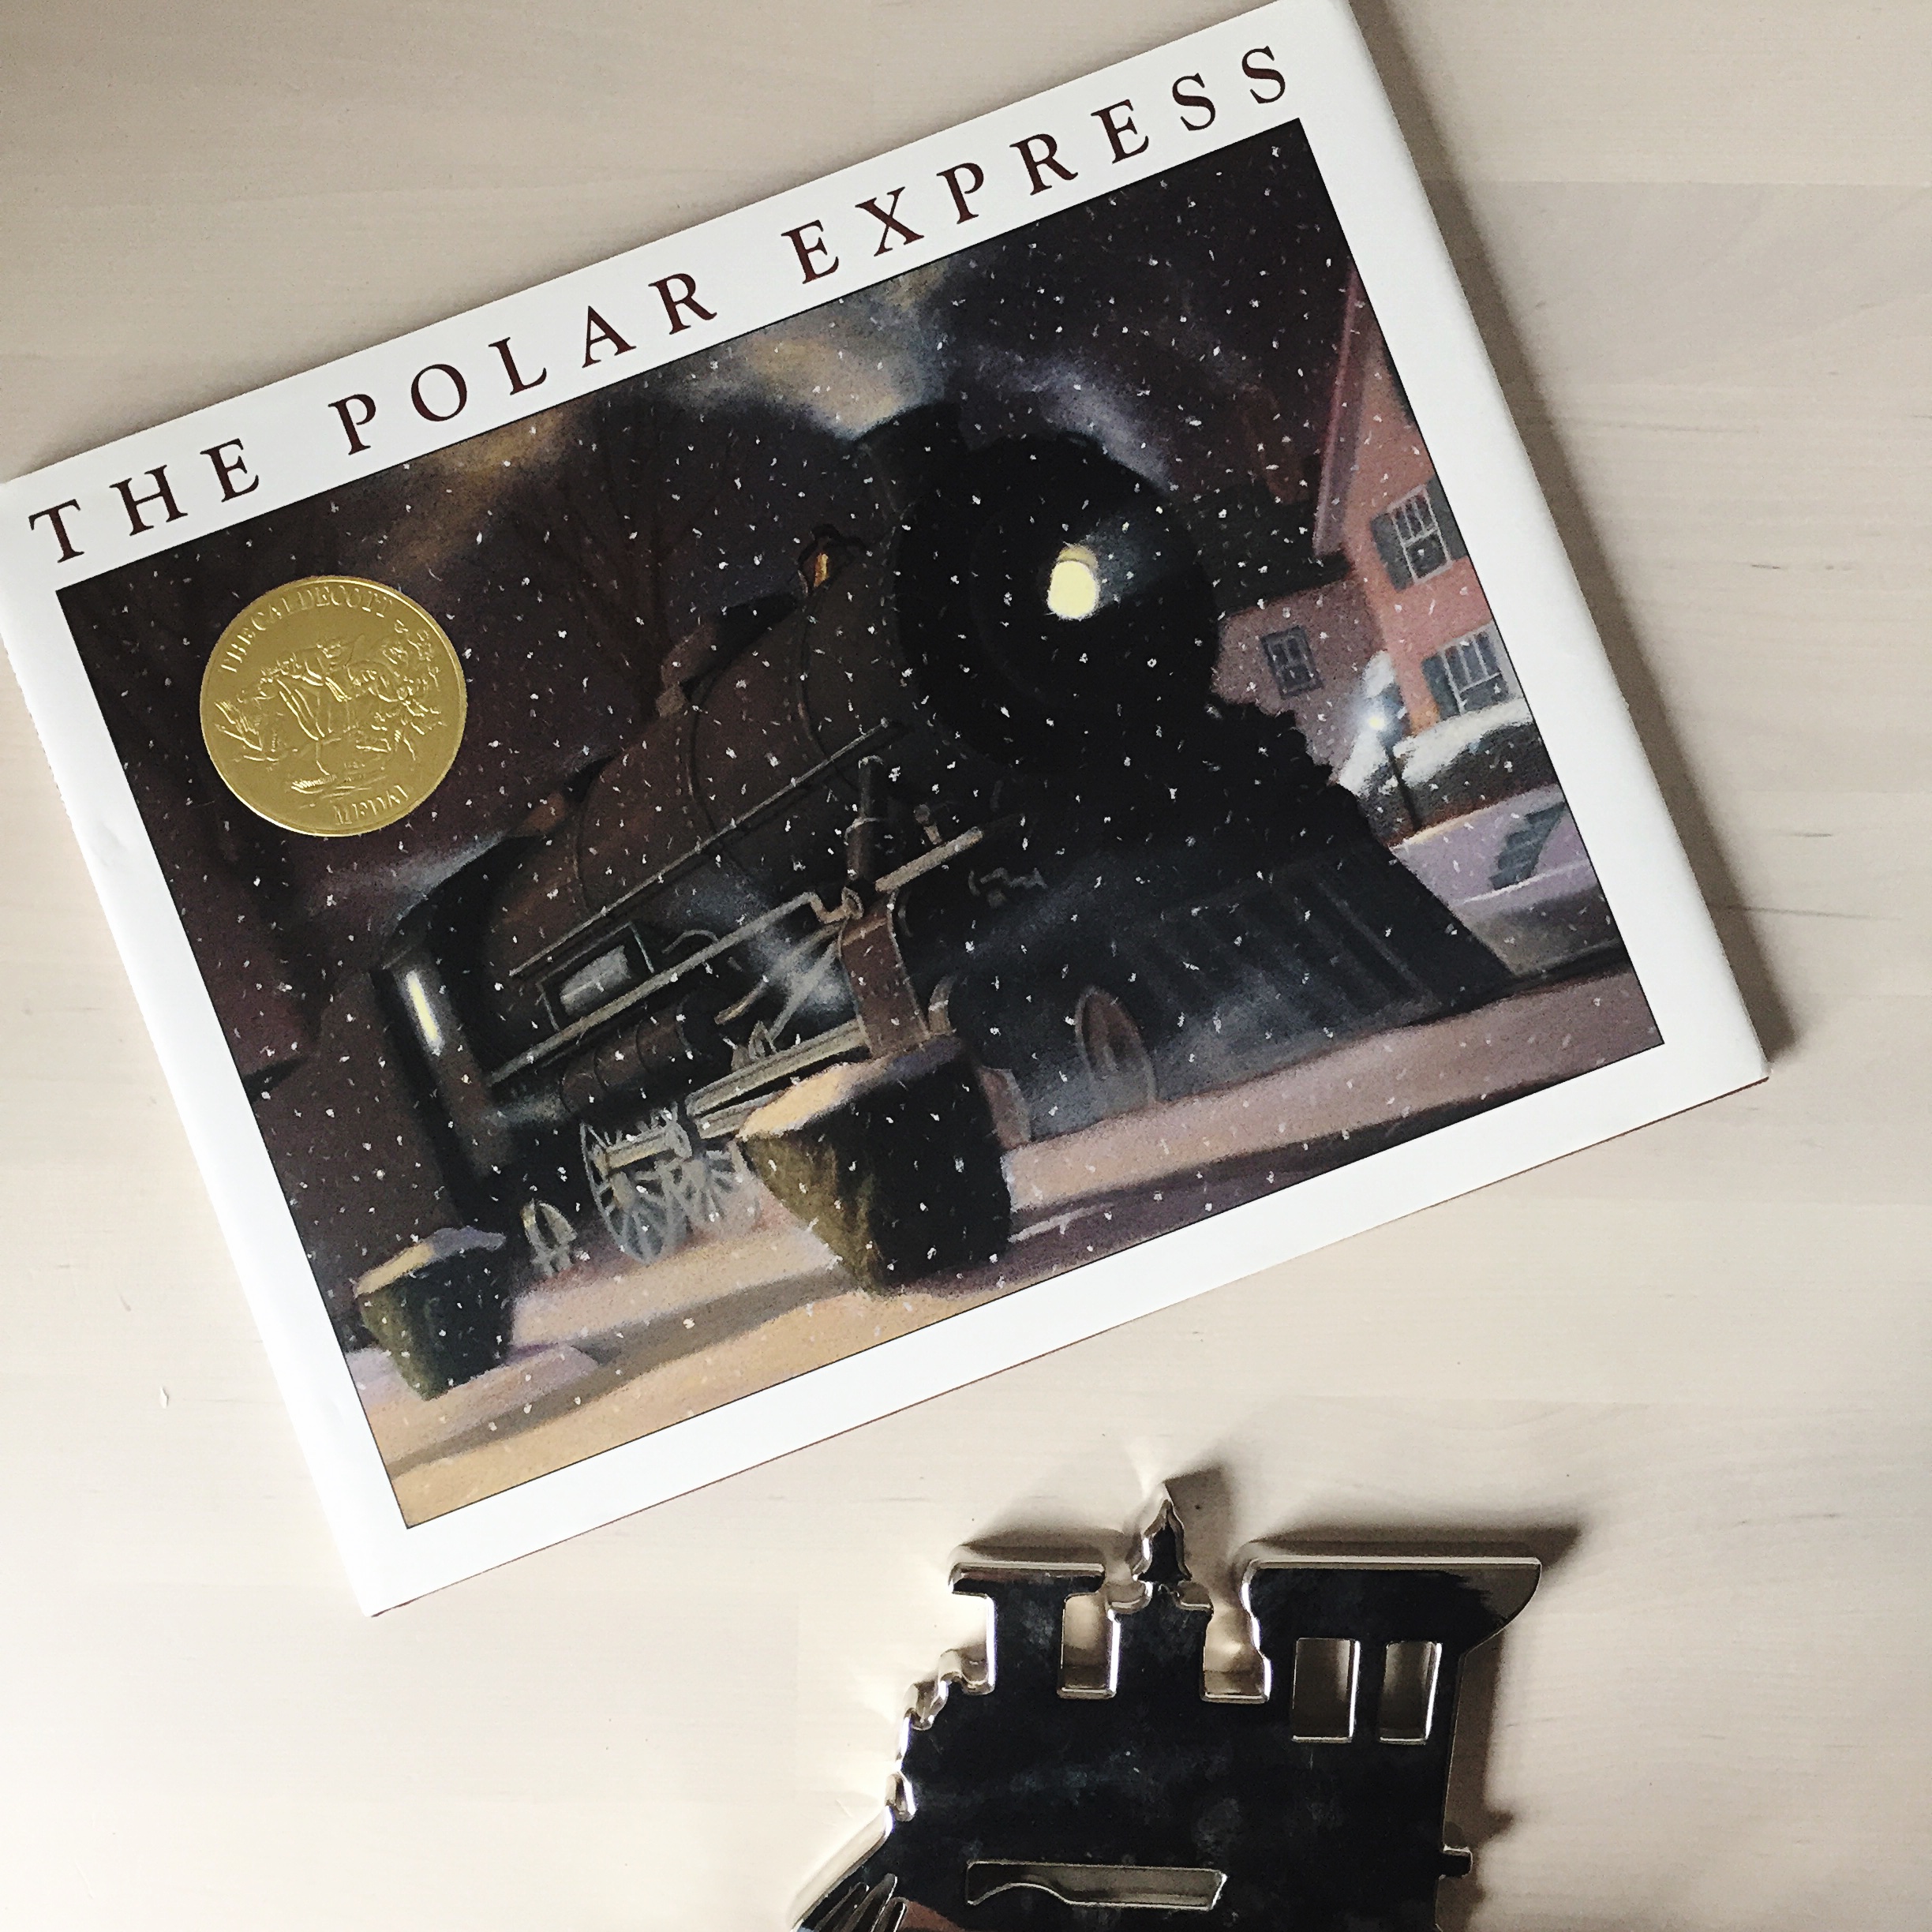 Polar Express Story Time